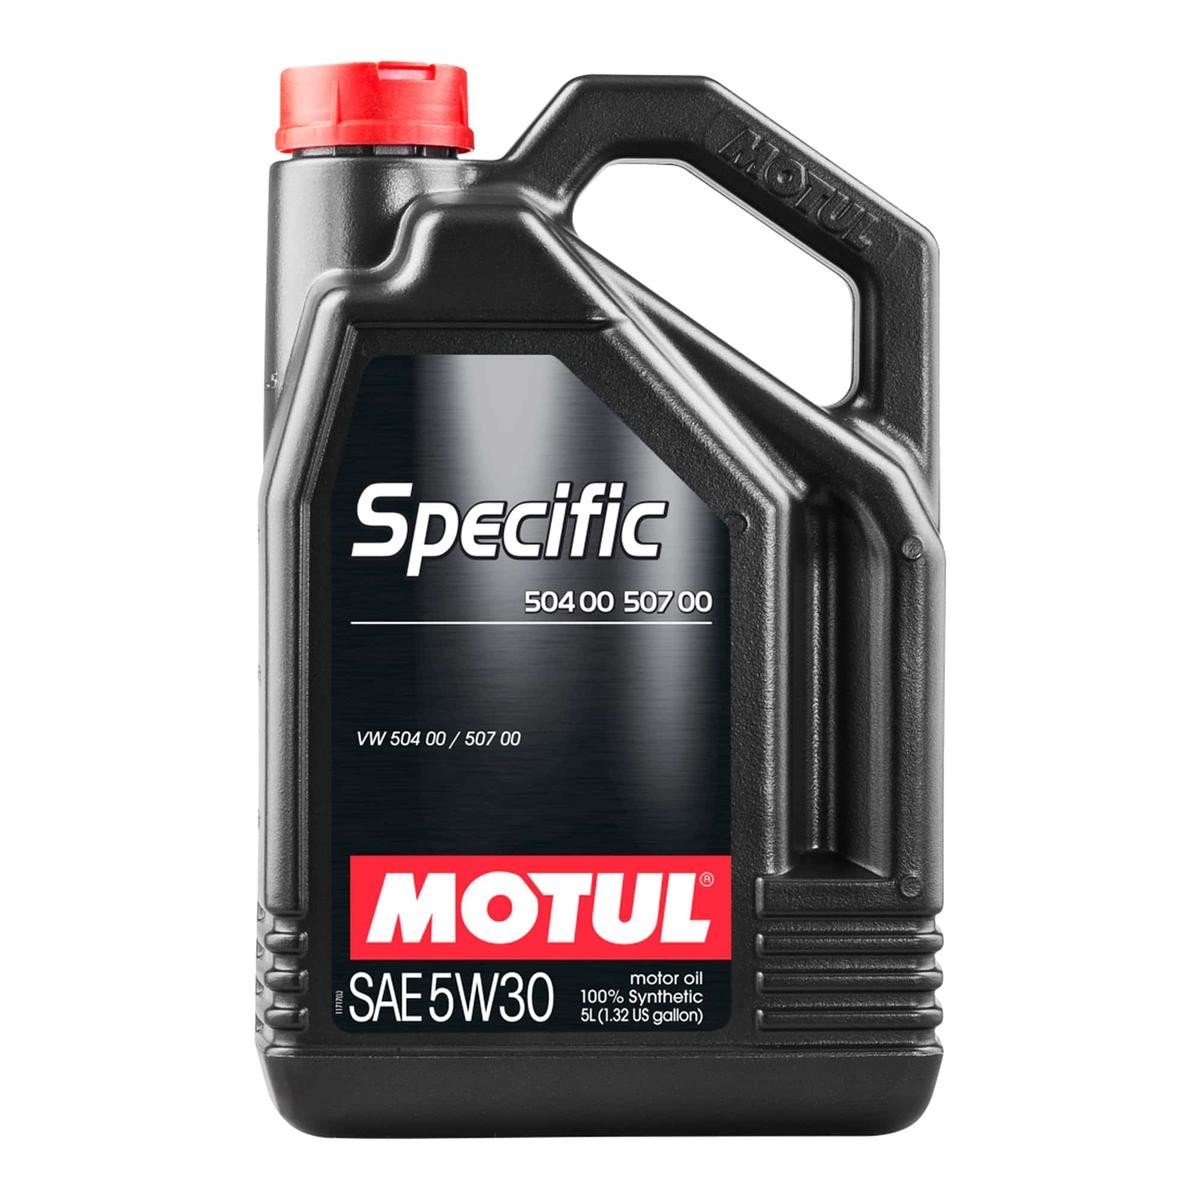 Fully synthetic engine oil petrol Motor oil MOTUL - 106375